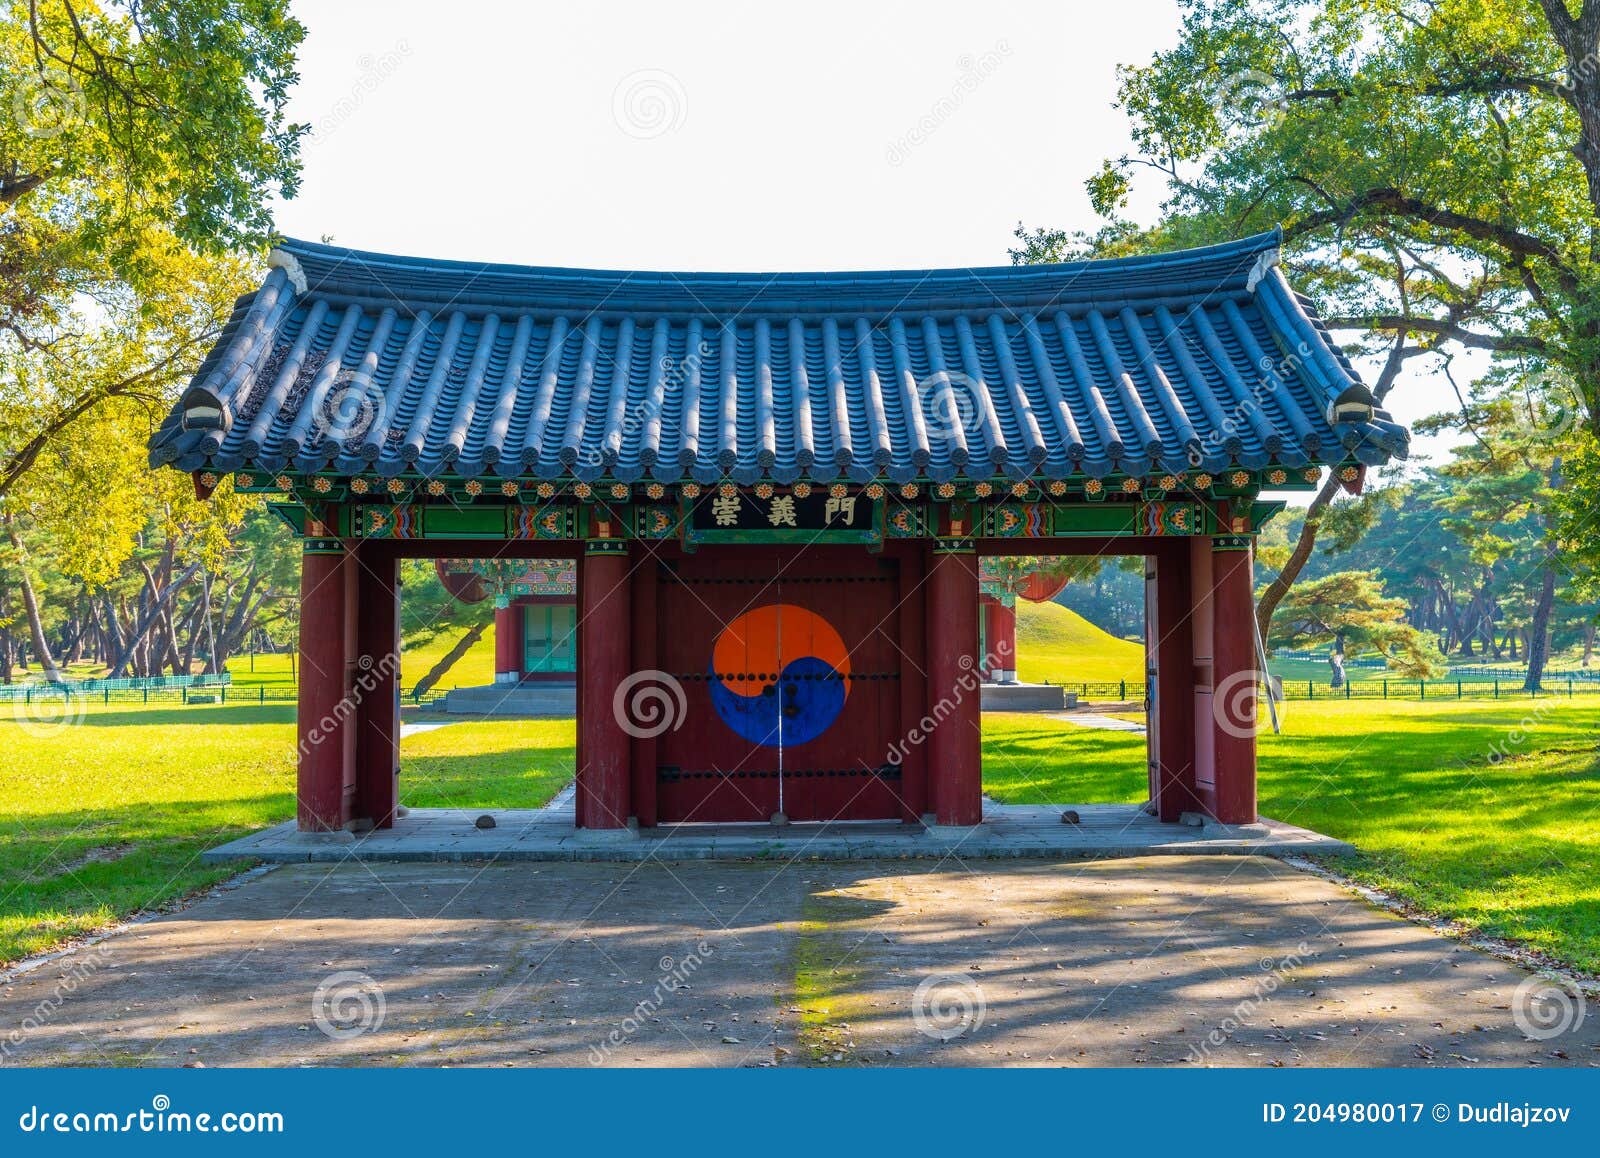 silla oreung royal tombs at gyeongju, republic of korea